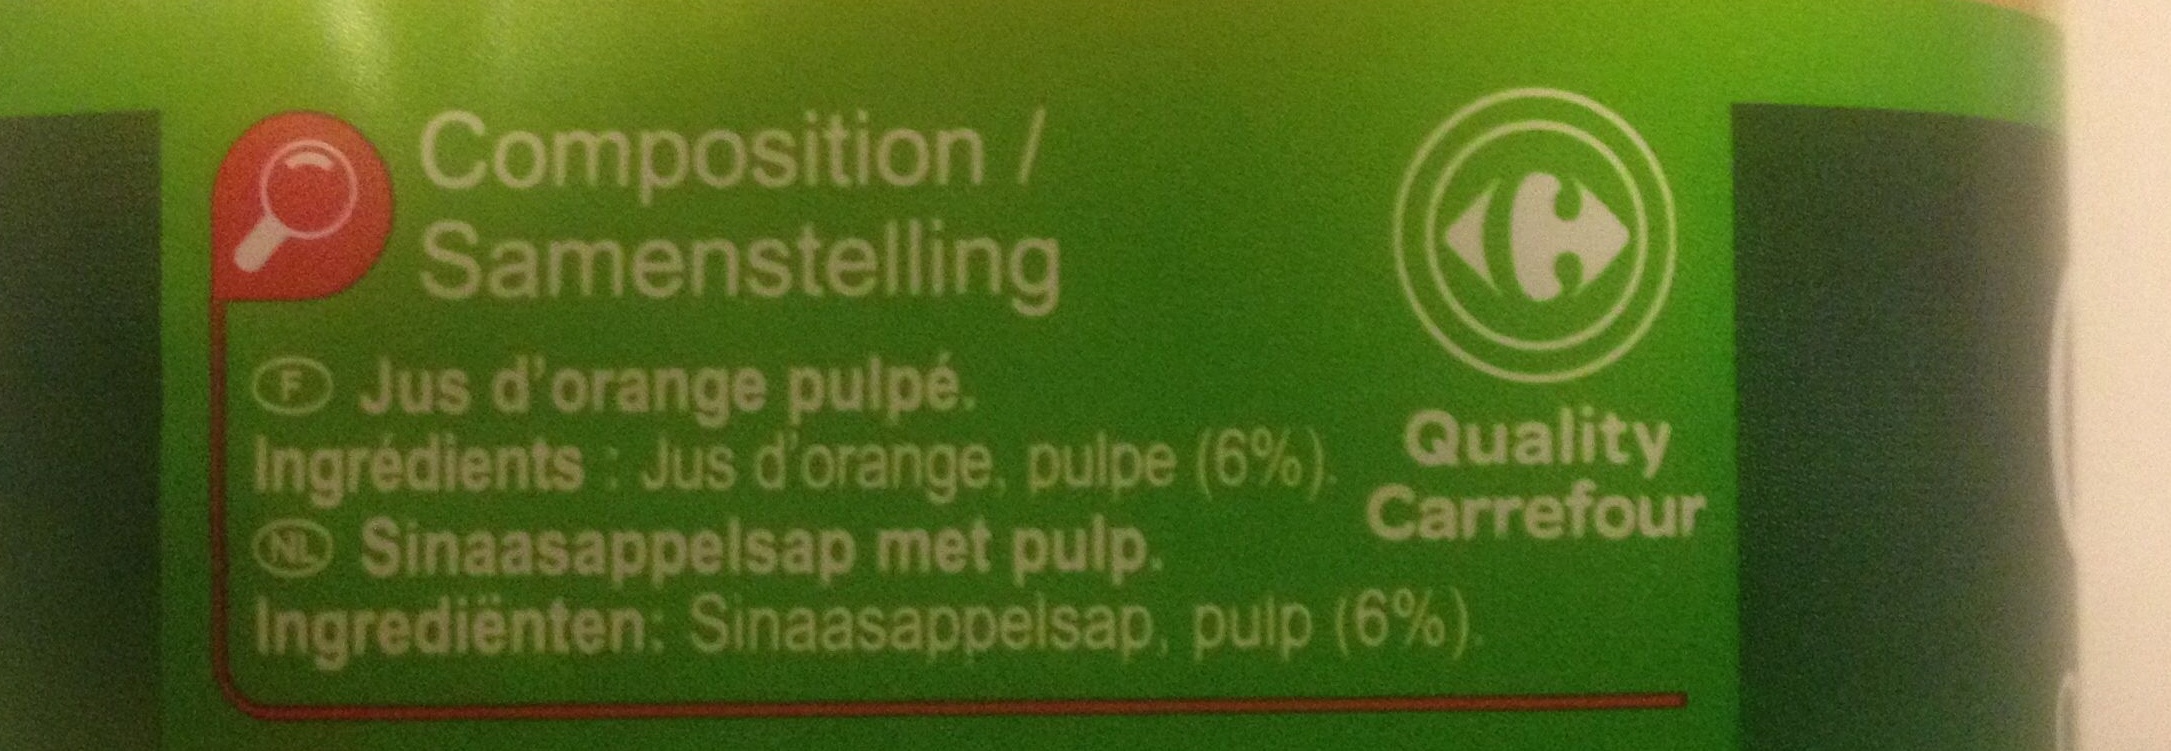 Jus d'orange pulpé - Ingredients - fr